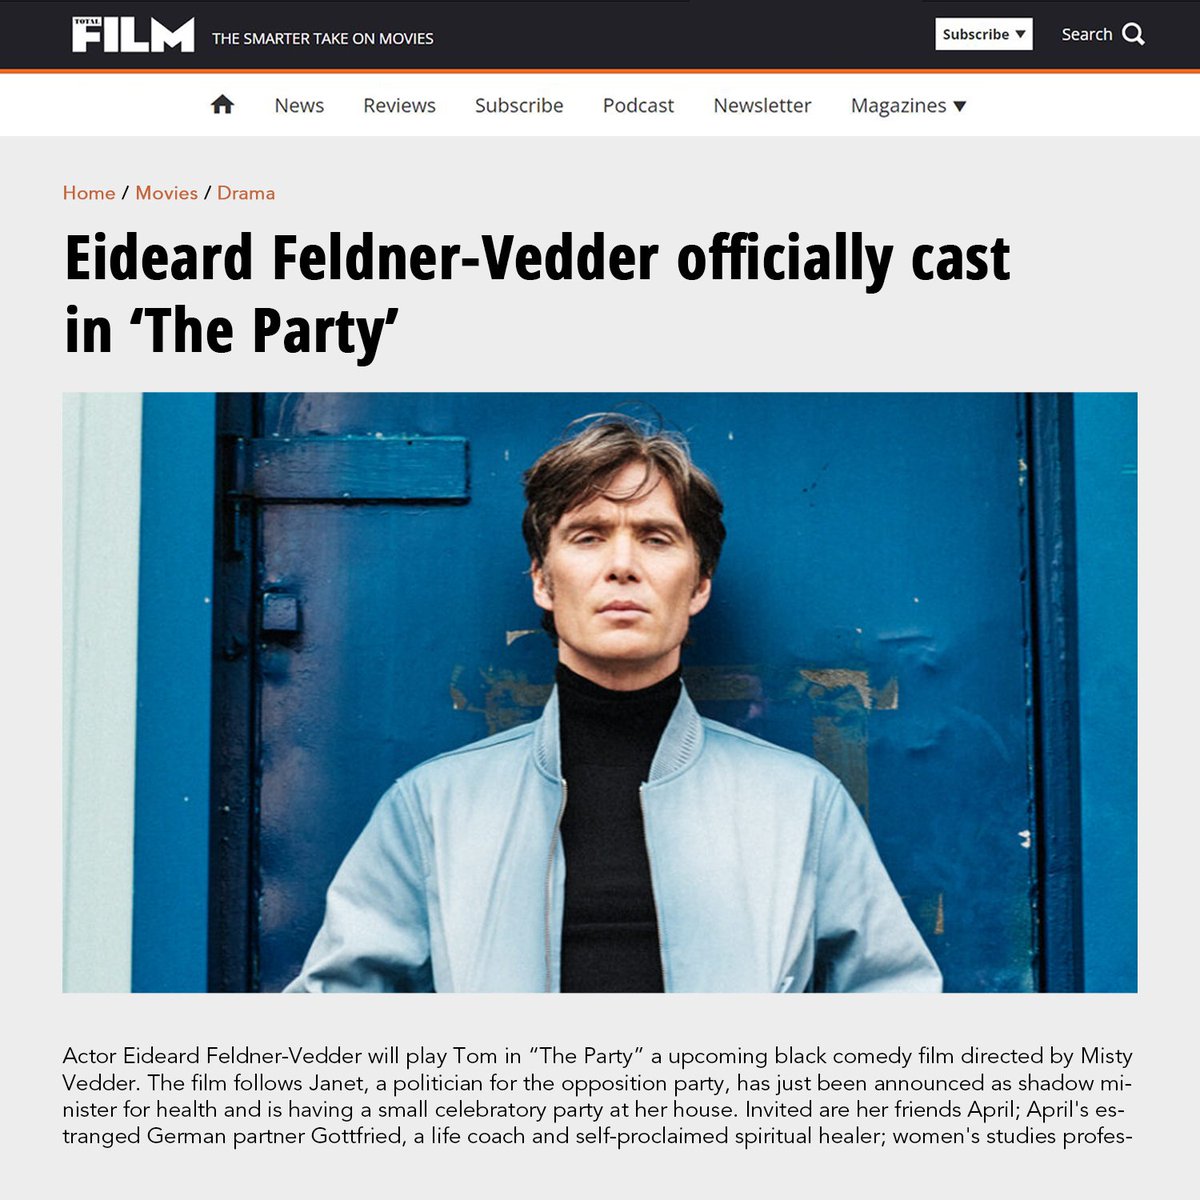 © #TotalFilmRP › 𝗧𝗵𝗲 𝗣𝗮𝗿𝘁𝘆 𝗠𝗼𝘃𝗶𝗲
→ Eideard Feldner-Vedder (@F1NEMESS) will play Tom in #ThePartyFilmRP, an upcoming black comedy produced by #NeonRatedRP.